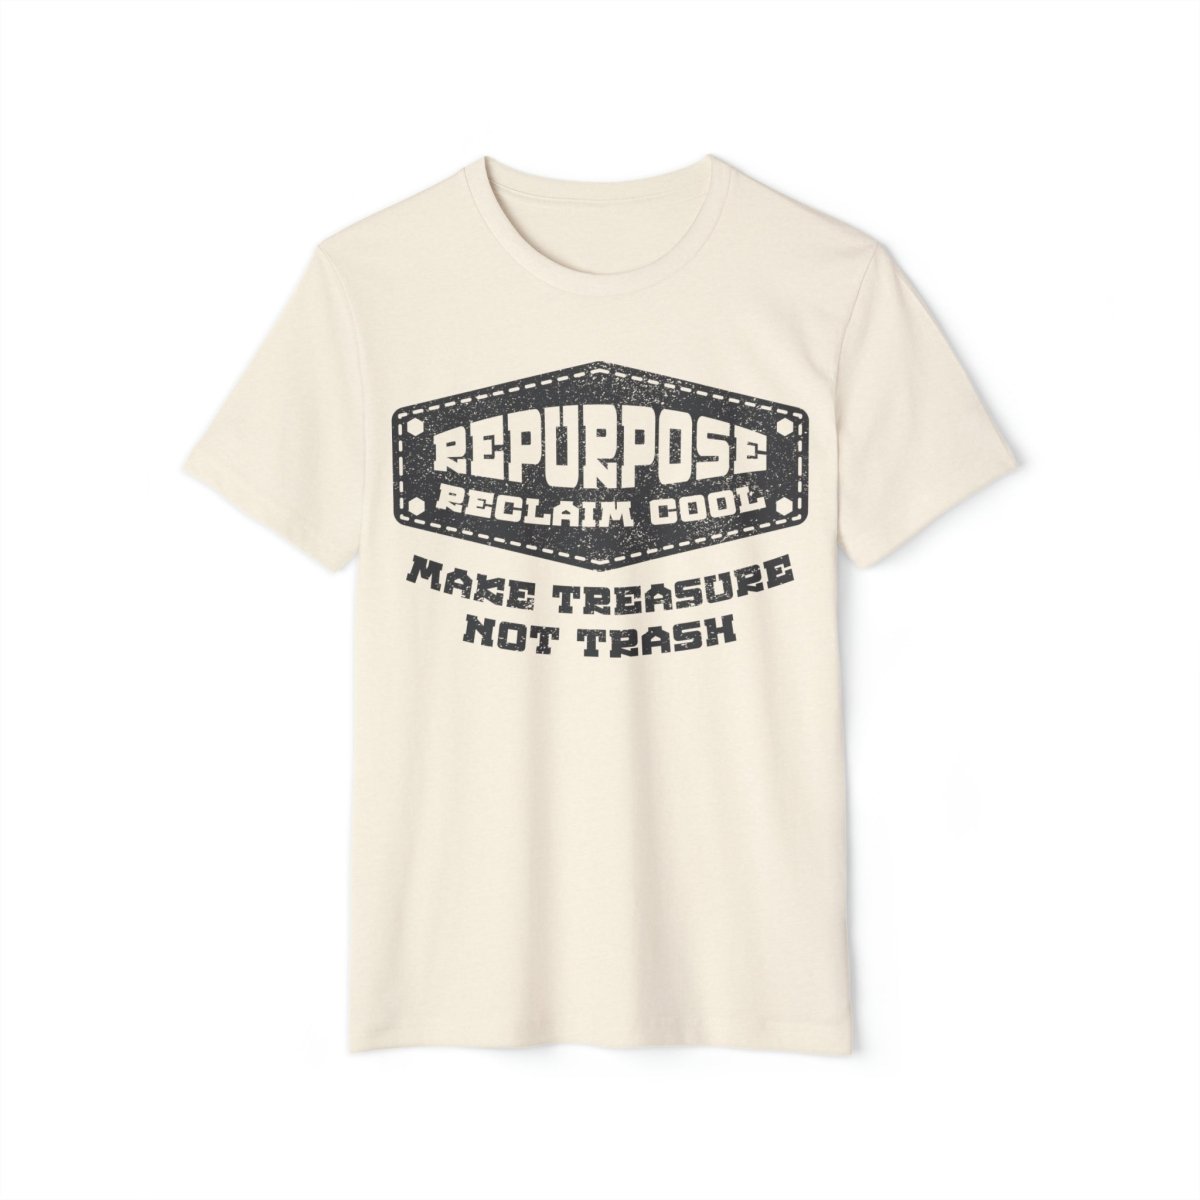 Repurpose Organic Cotton Recycled Polyester Premium T-Shirt, Reclaim Cool, Make Treasure Not Trash, Tree Huggers Union